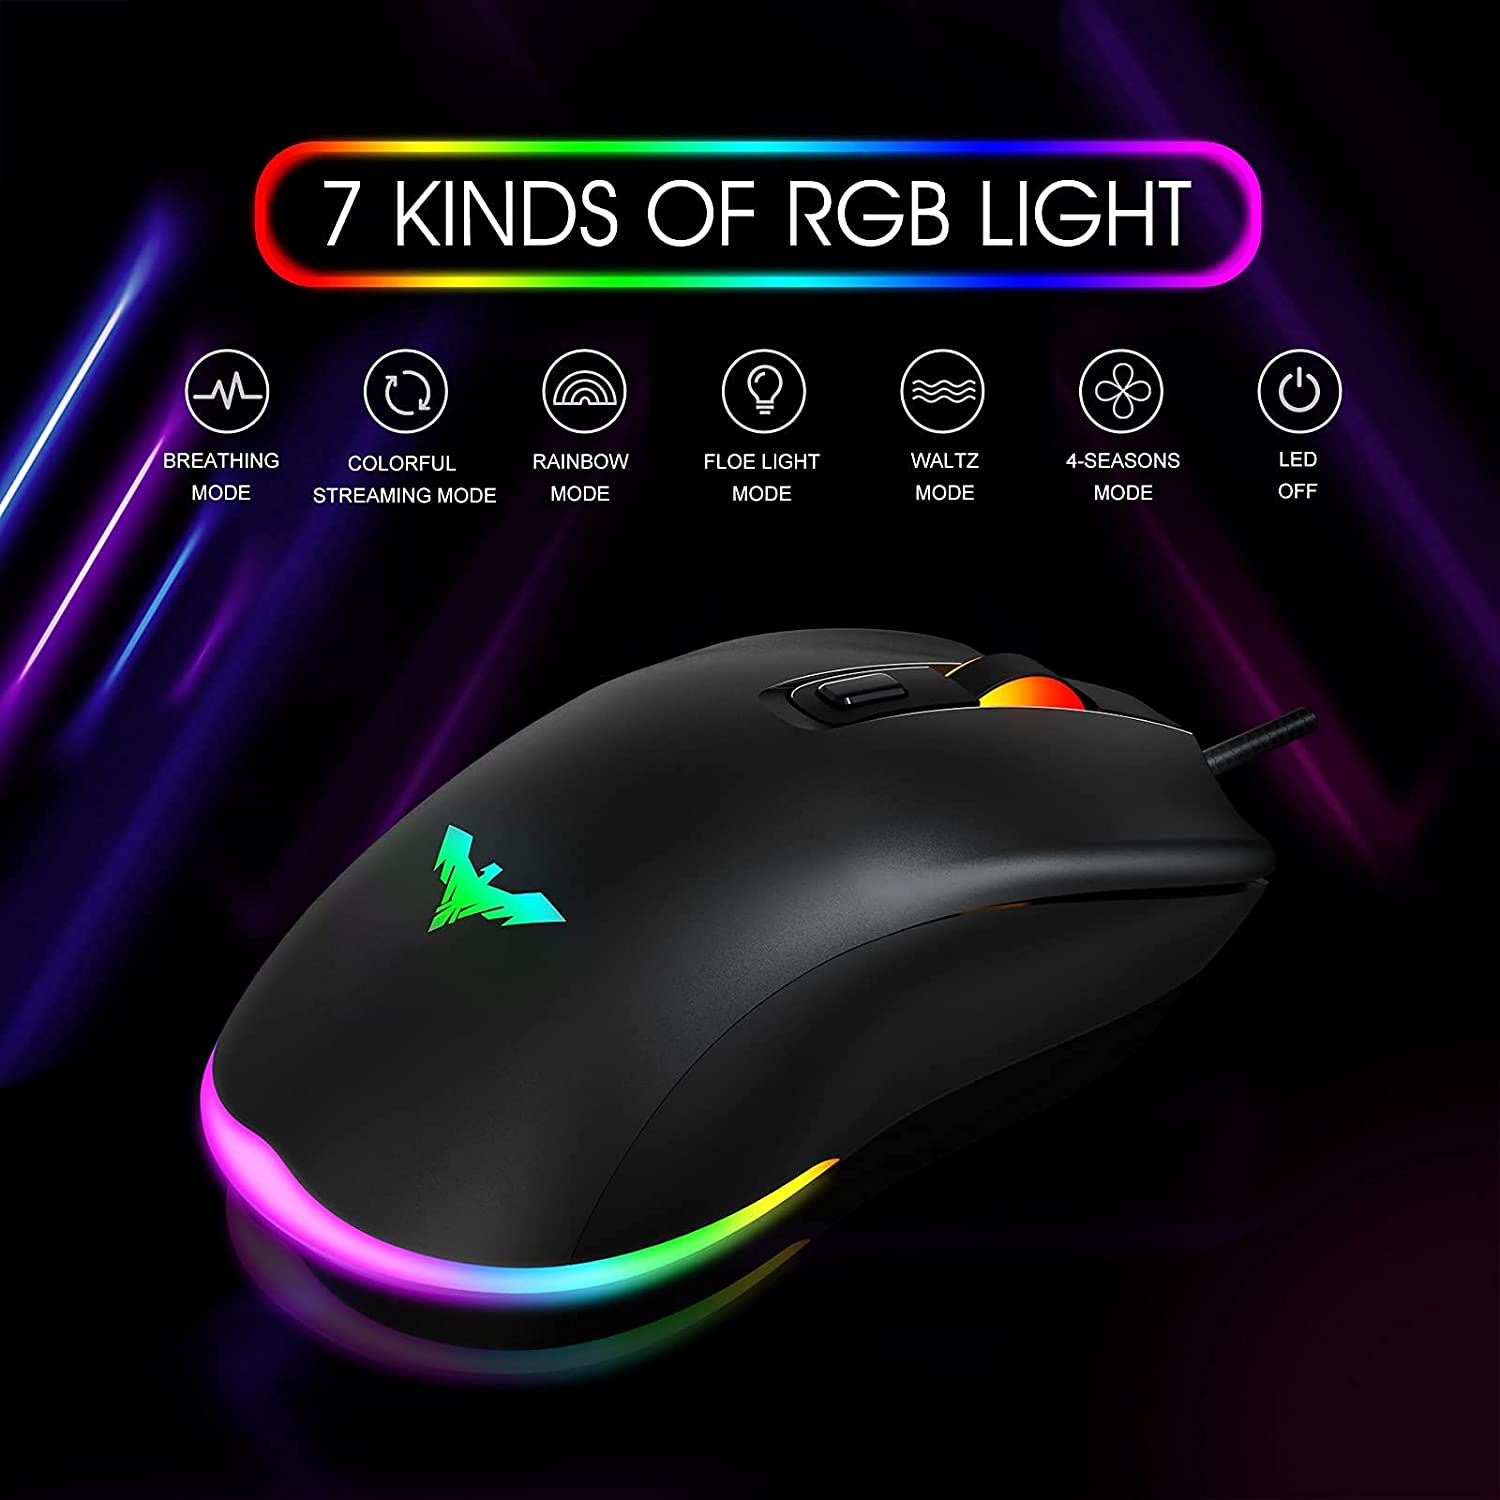 HAVIT HV-KB558CM Gaming Keyboard and Mouse Combo (Rainbow Backlit)